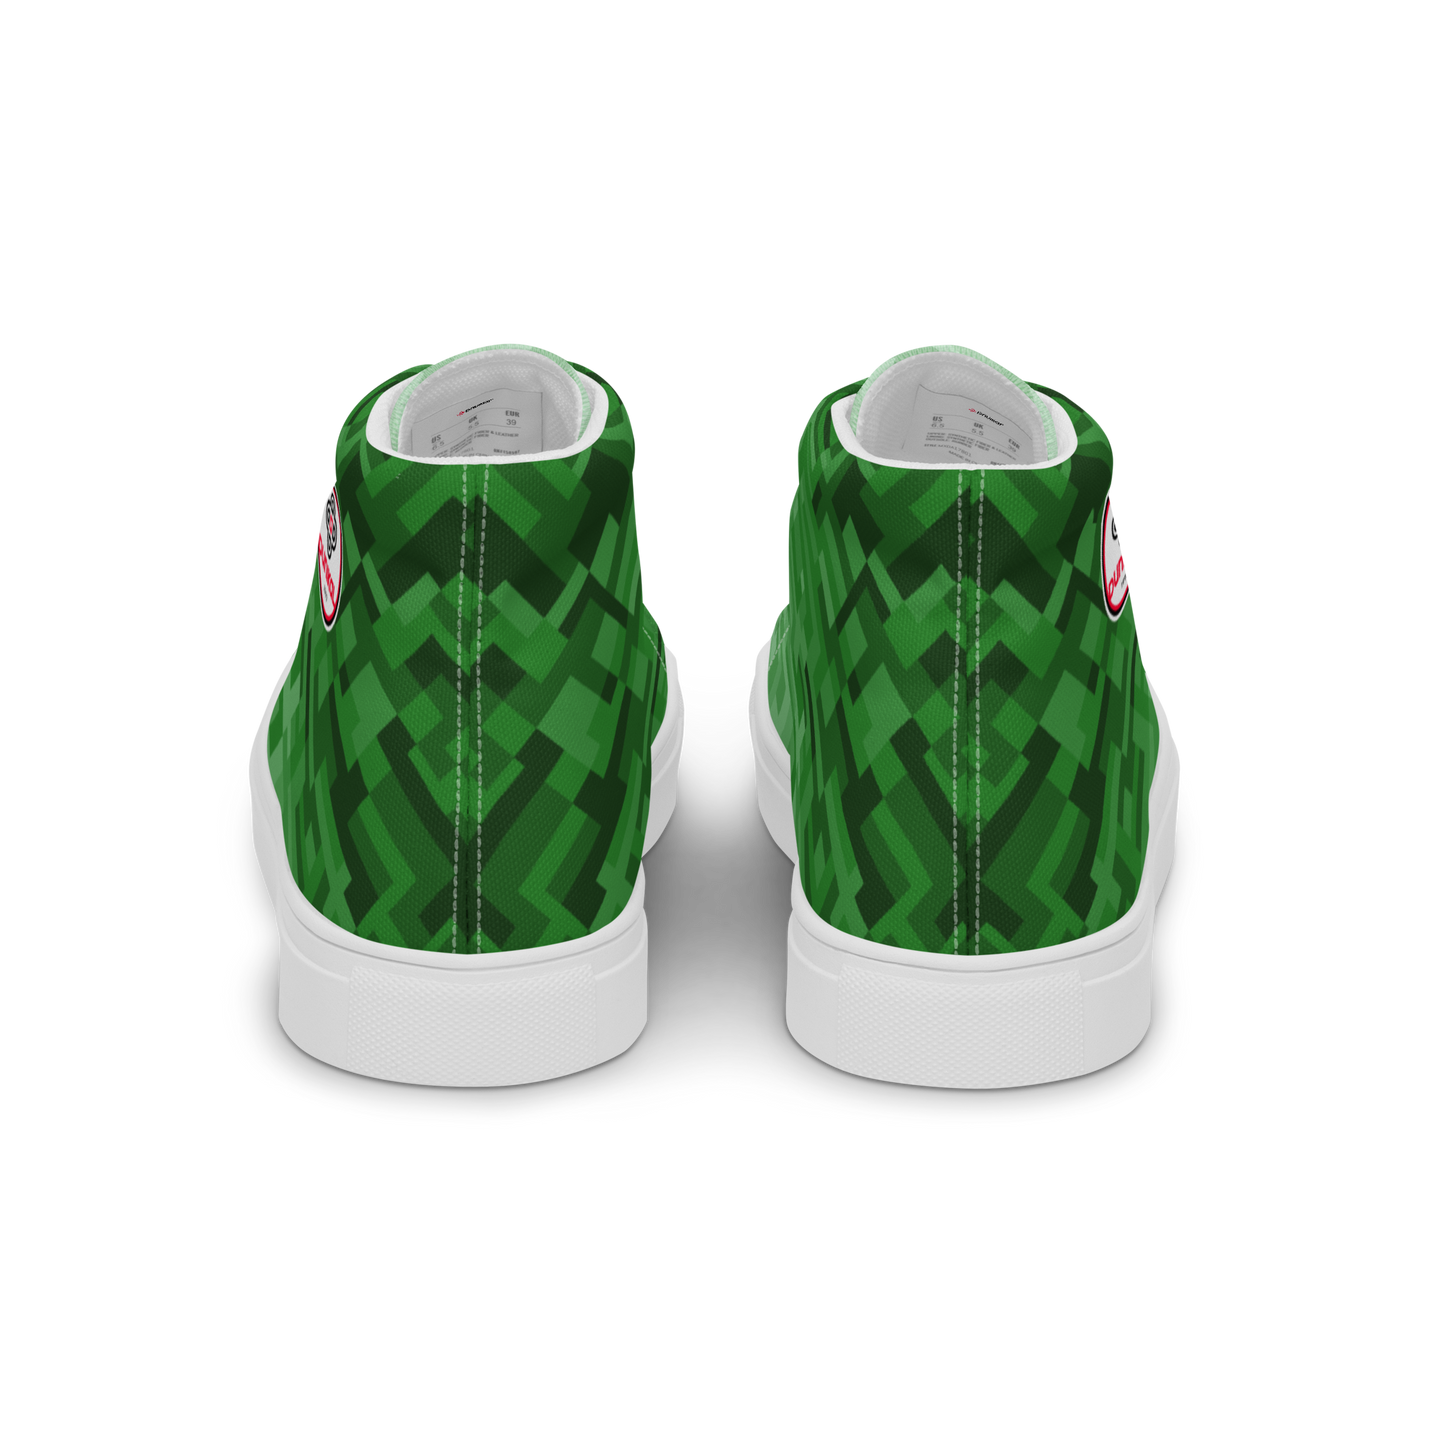 Women's Canvas Sneakers ❯ Polygonal Gradient ❯ Forest Green